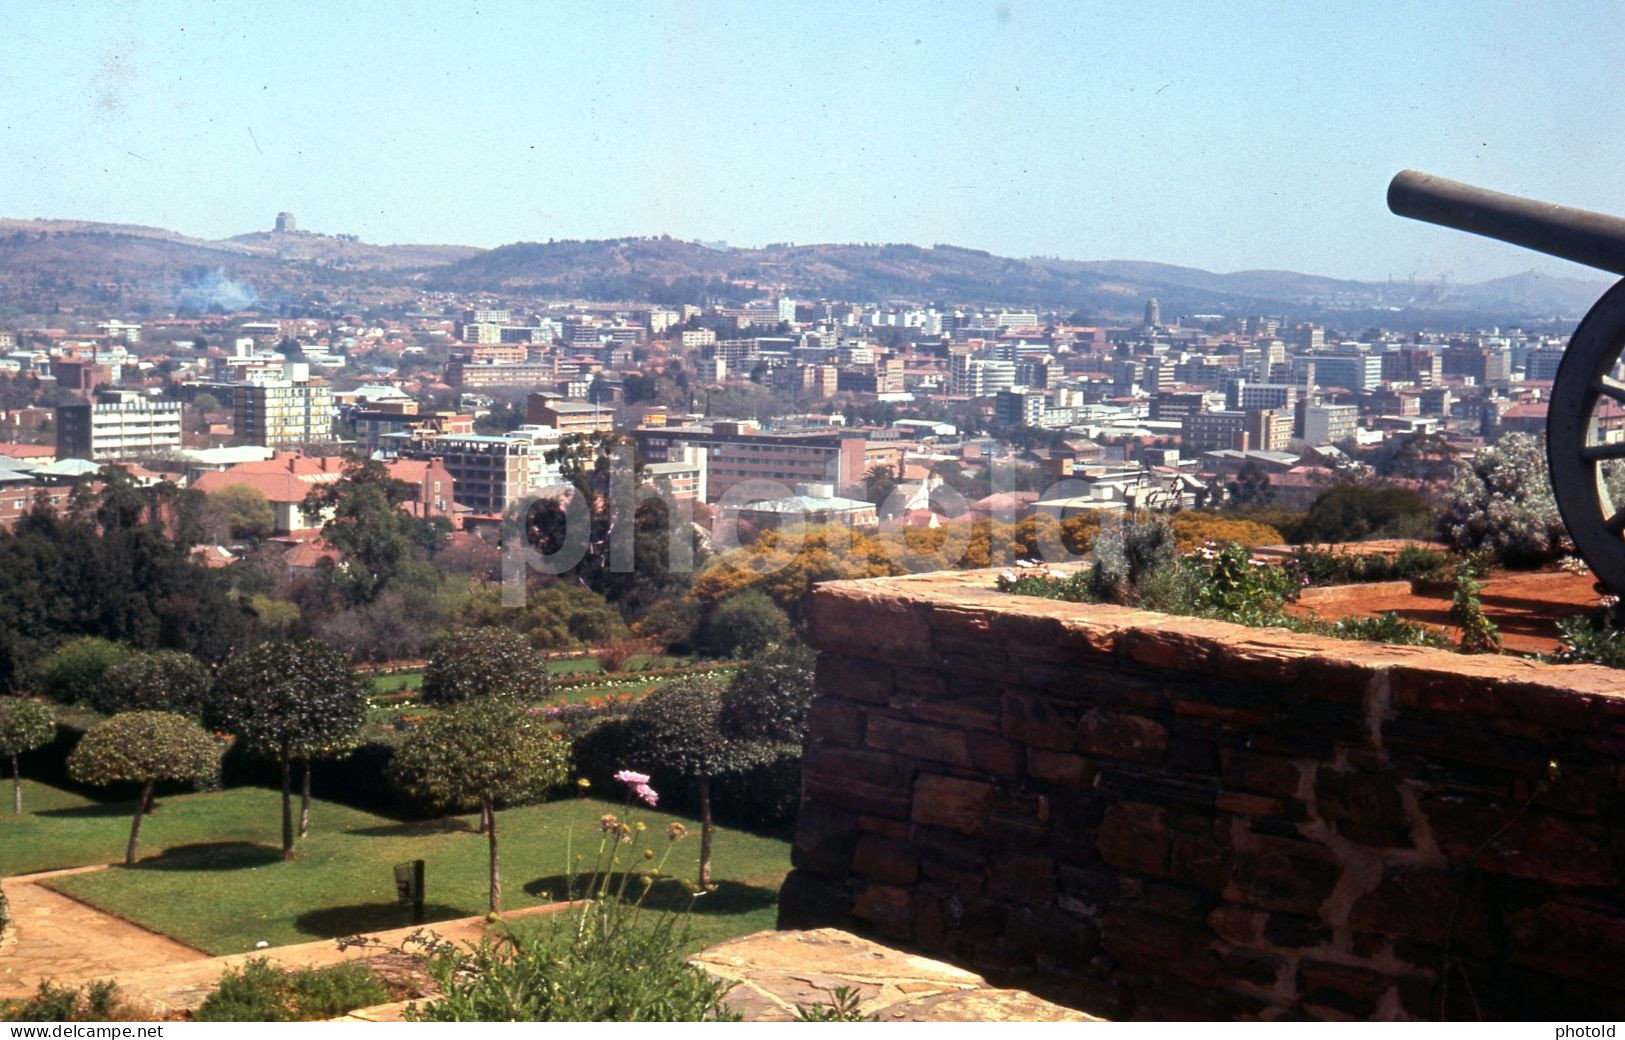 15 SLIDES SET 1964 JOHANNESBURG PRETORIA SOUTH AFRICA AFRIQUE AMATEUR 35mm SLIDE NOT PHOTO FOTO Nb4122 - Diapositives (slides)